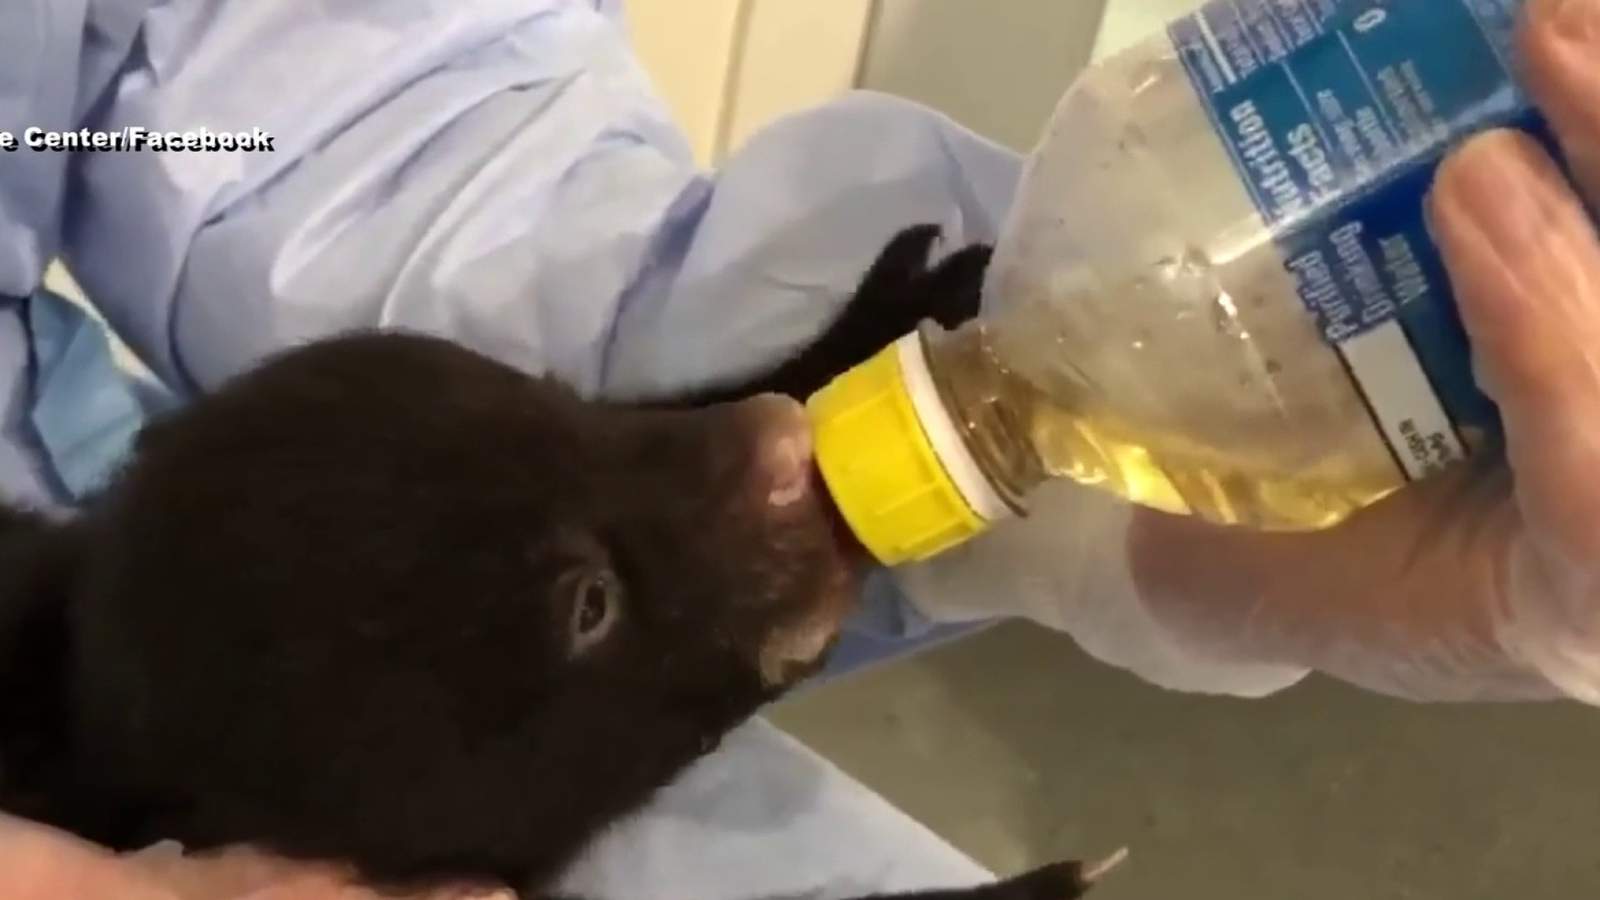 Bear-y strange: SWVA Wildlife Center caring for cubs found in cooler